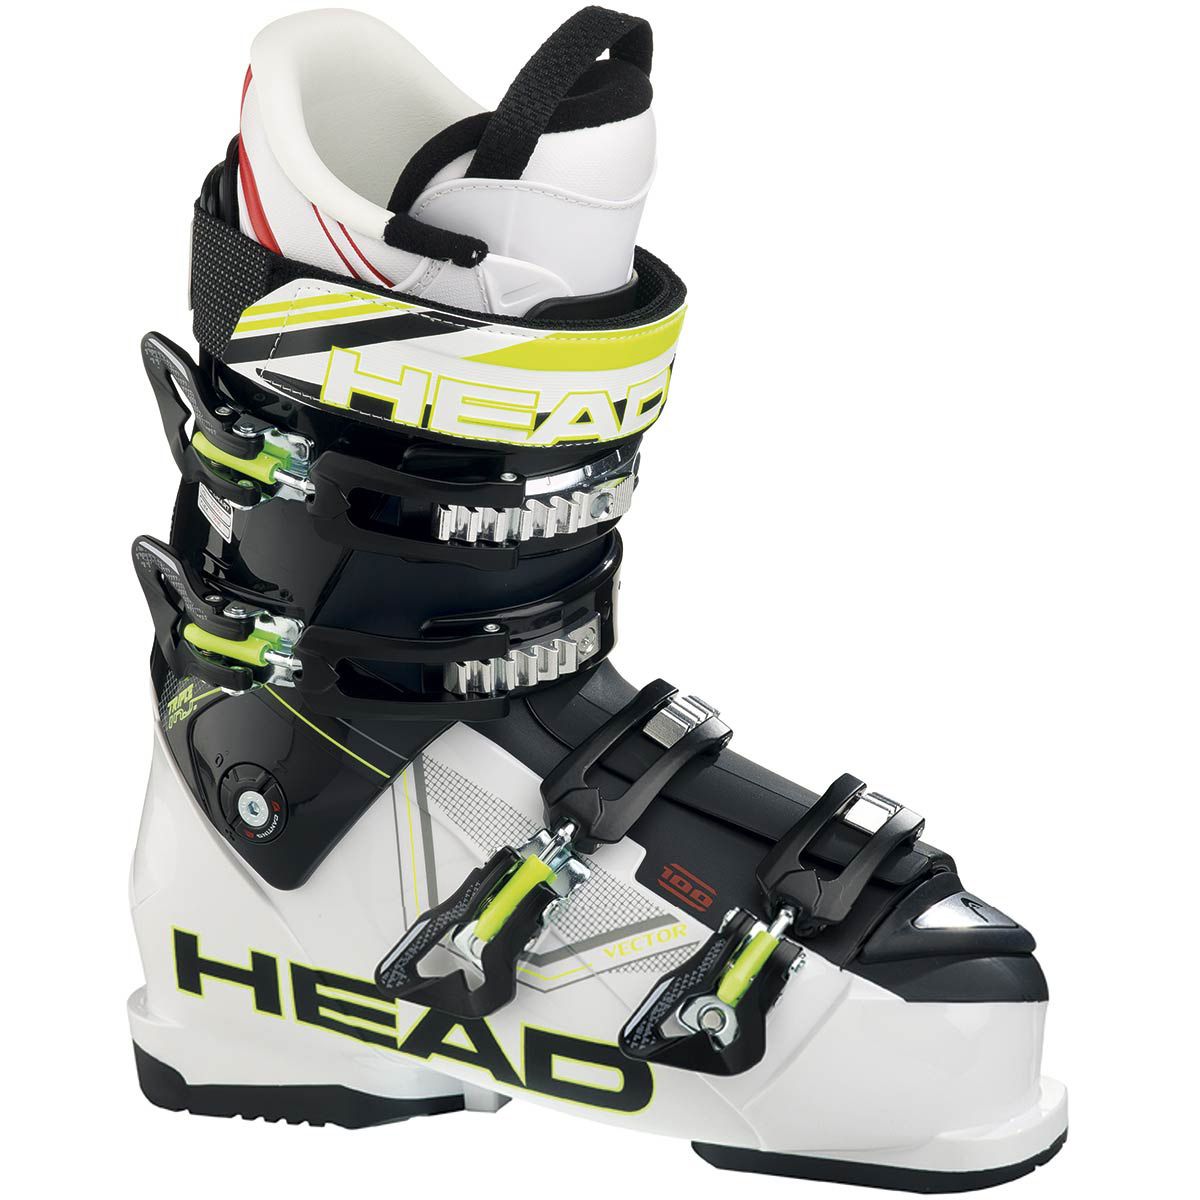 Chaussure ski Vector 100 en pointure 28